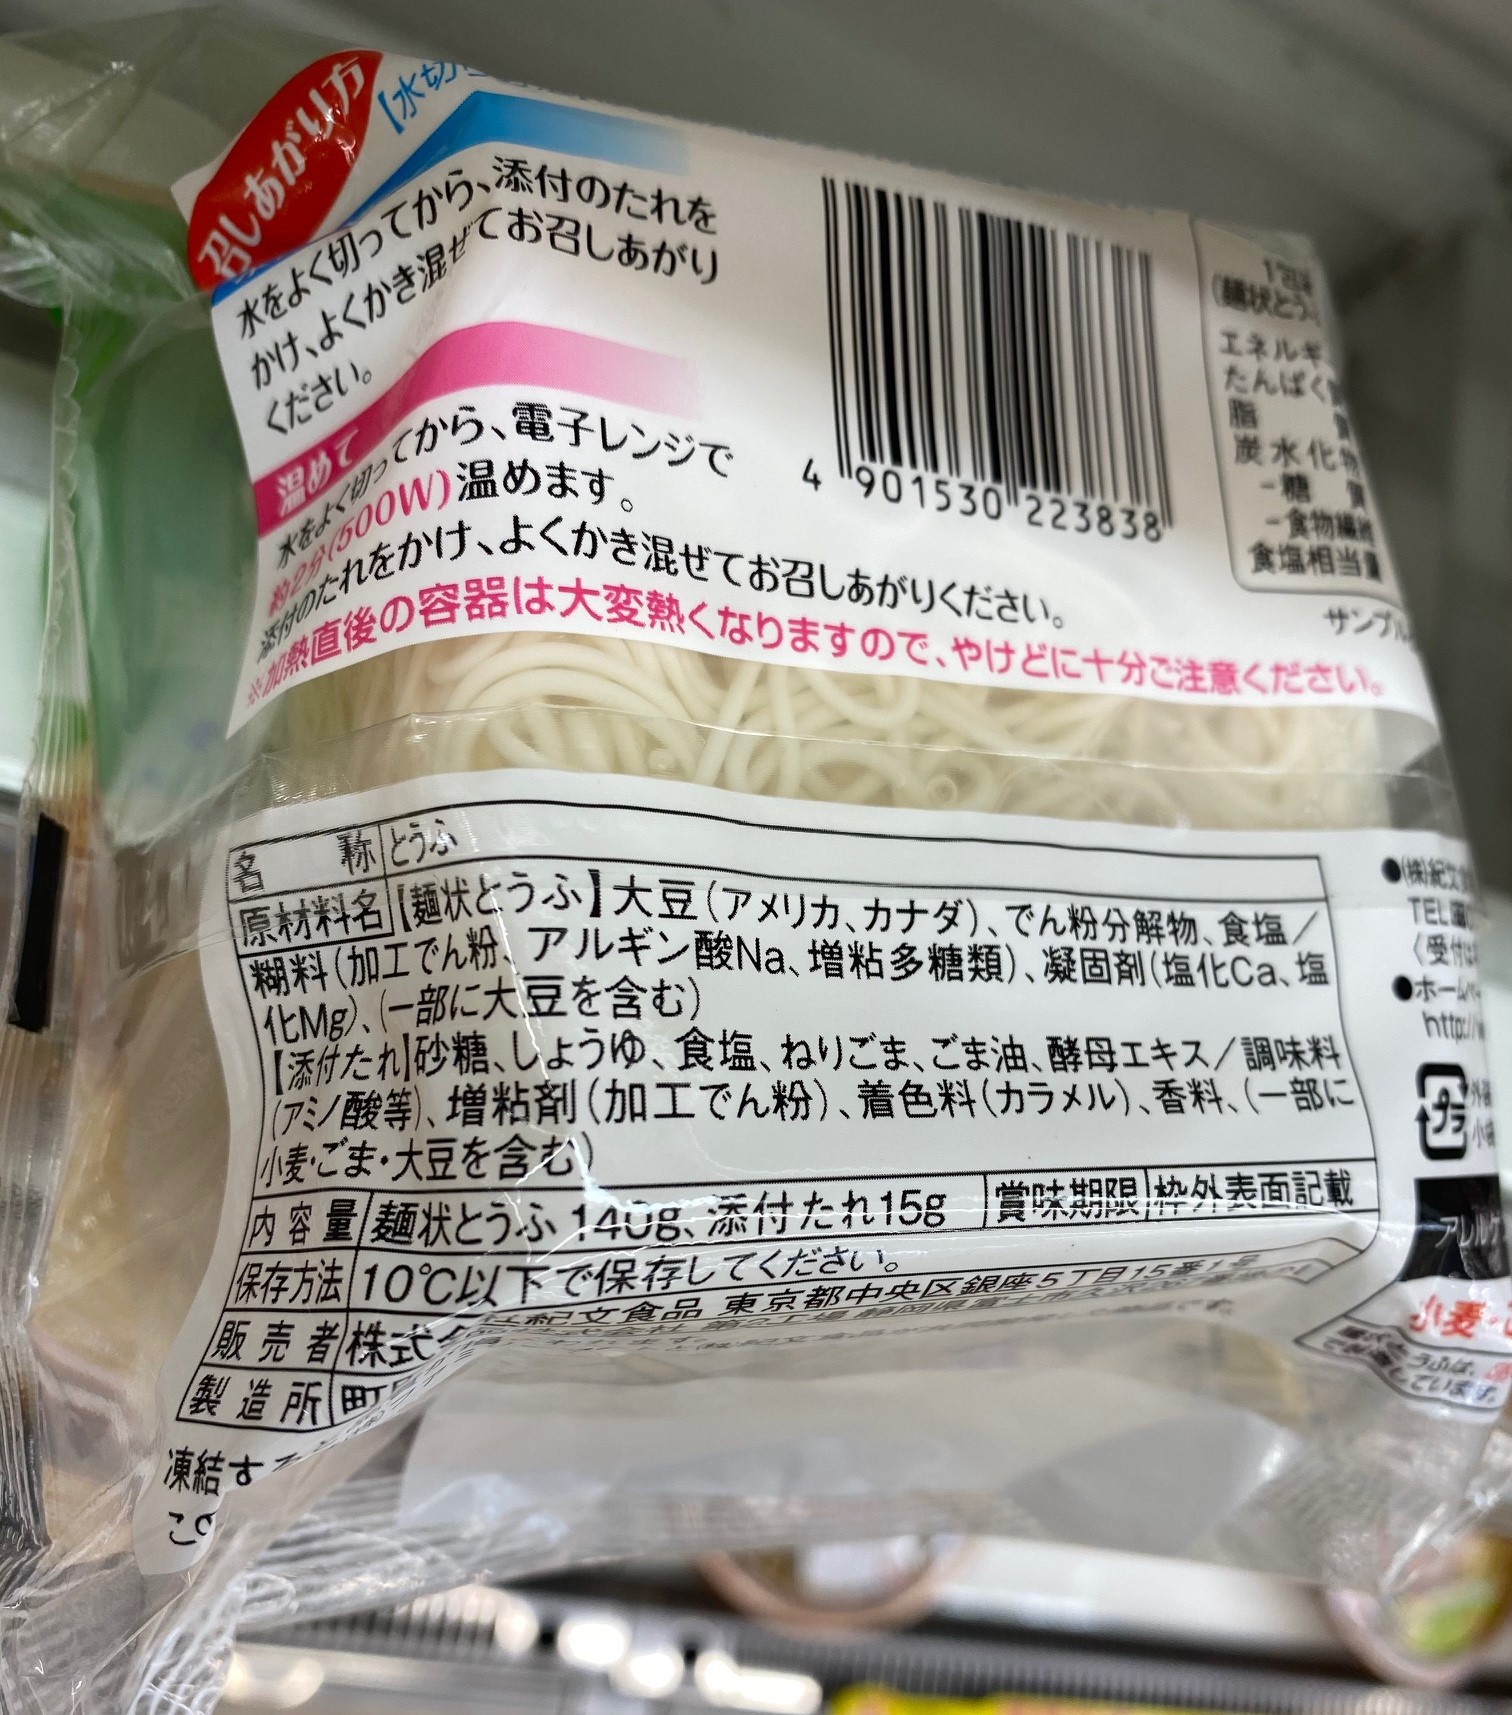 Family Mart, Mom’s Dining Room Kibun Tofu Noodles in Sesame Sauce, back of package